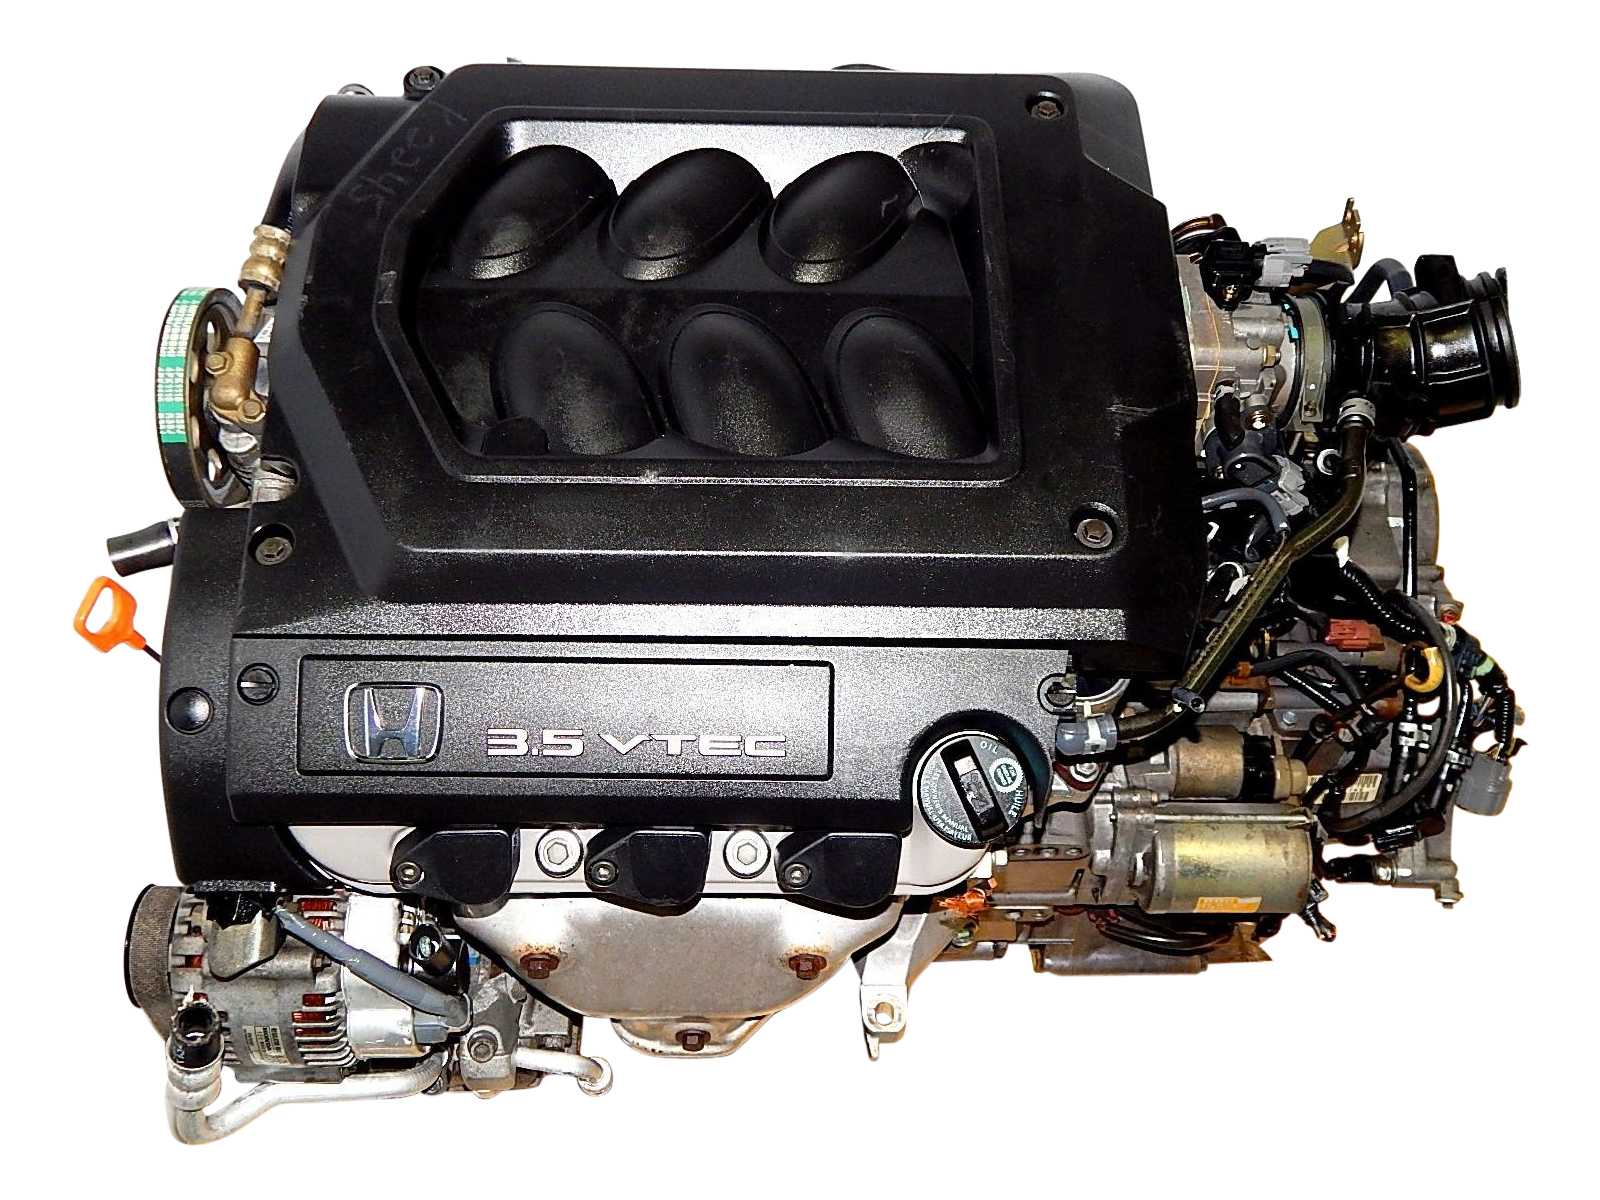 Honda Odyssey JDM used engine